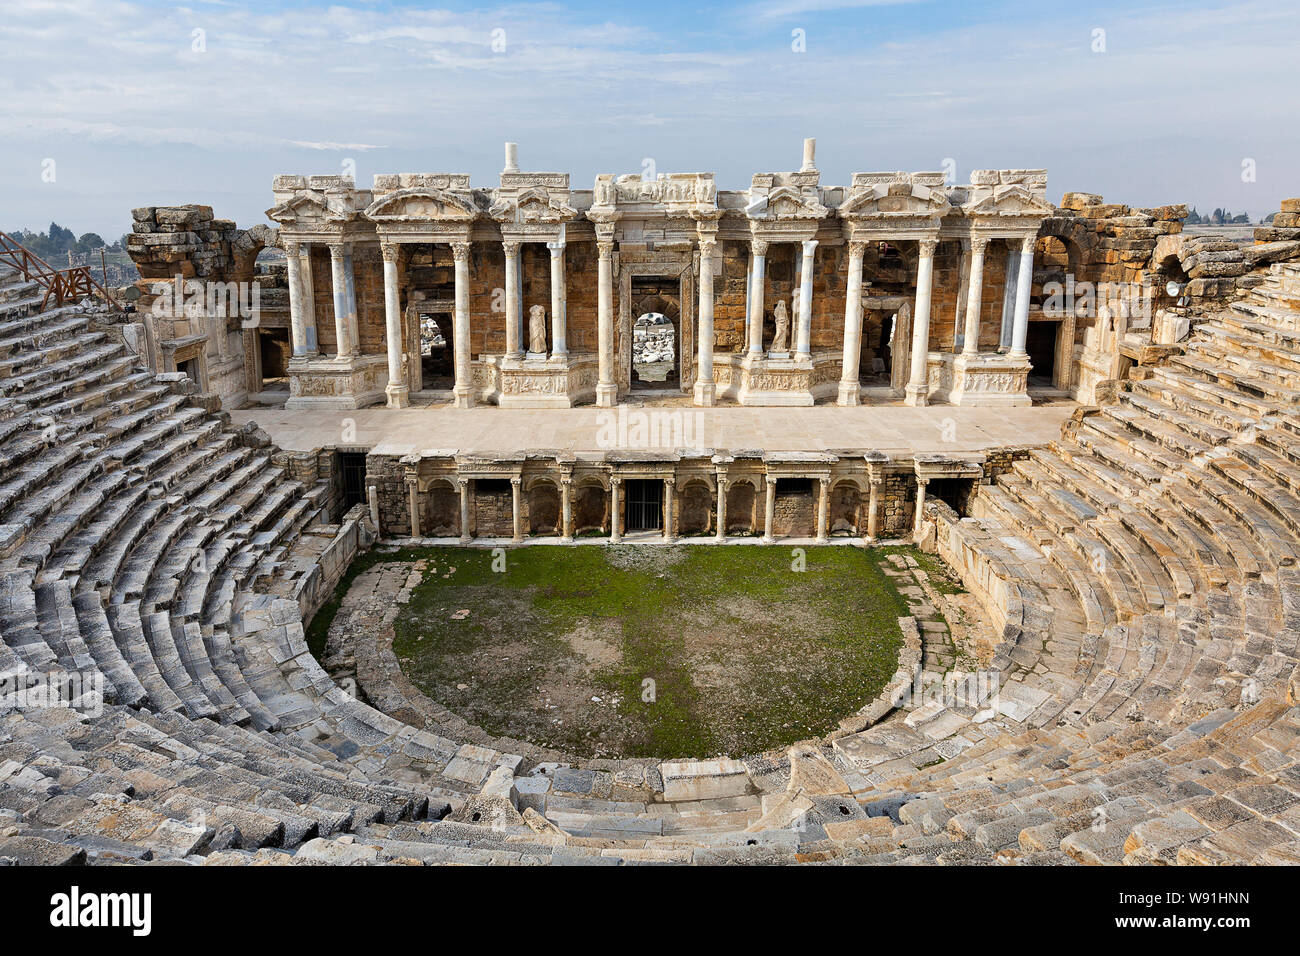 Roman amphitheater in the ruins of Hierapolis, in Pamukkale, Turkey. Stock Photo